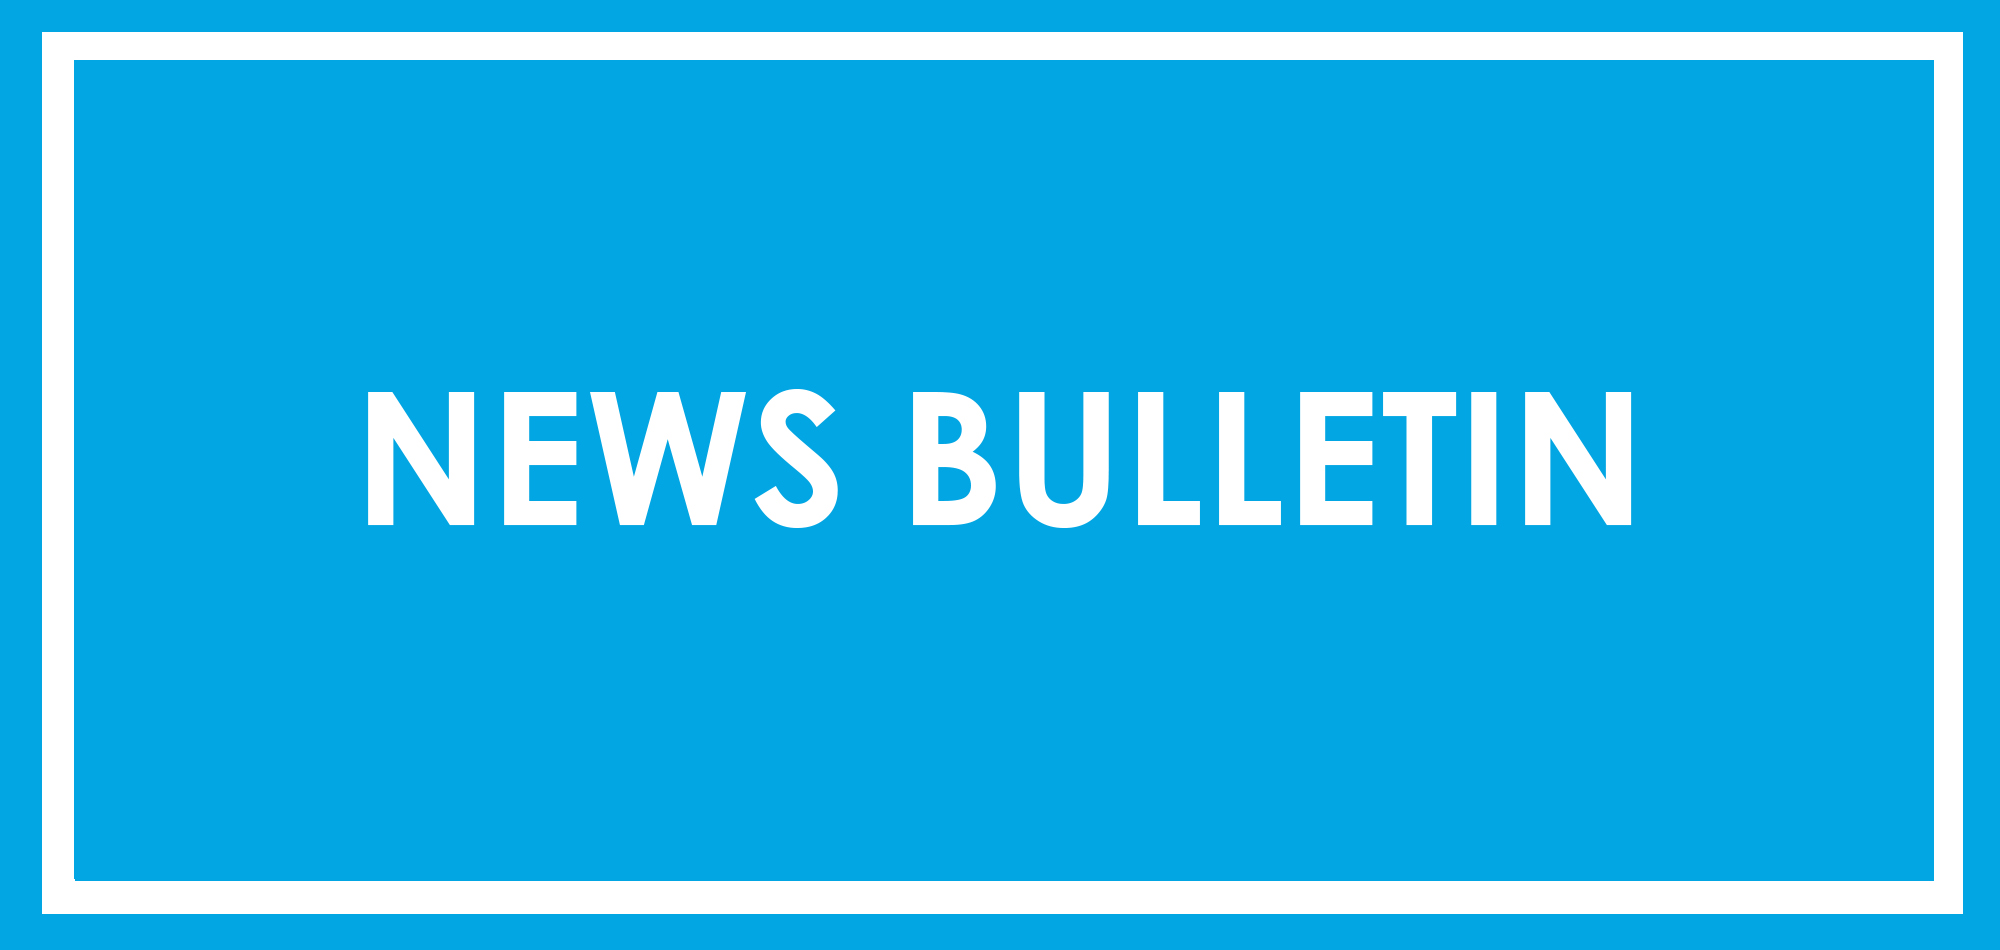 News Bulletin - 13.05.21